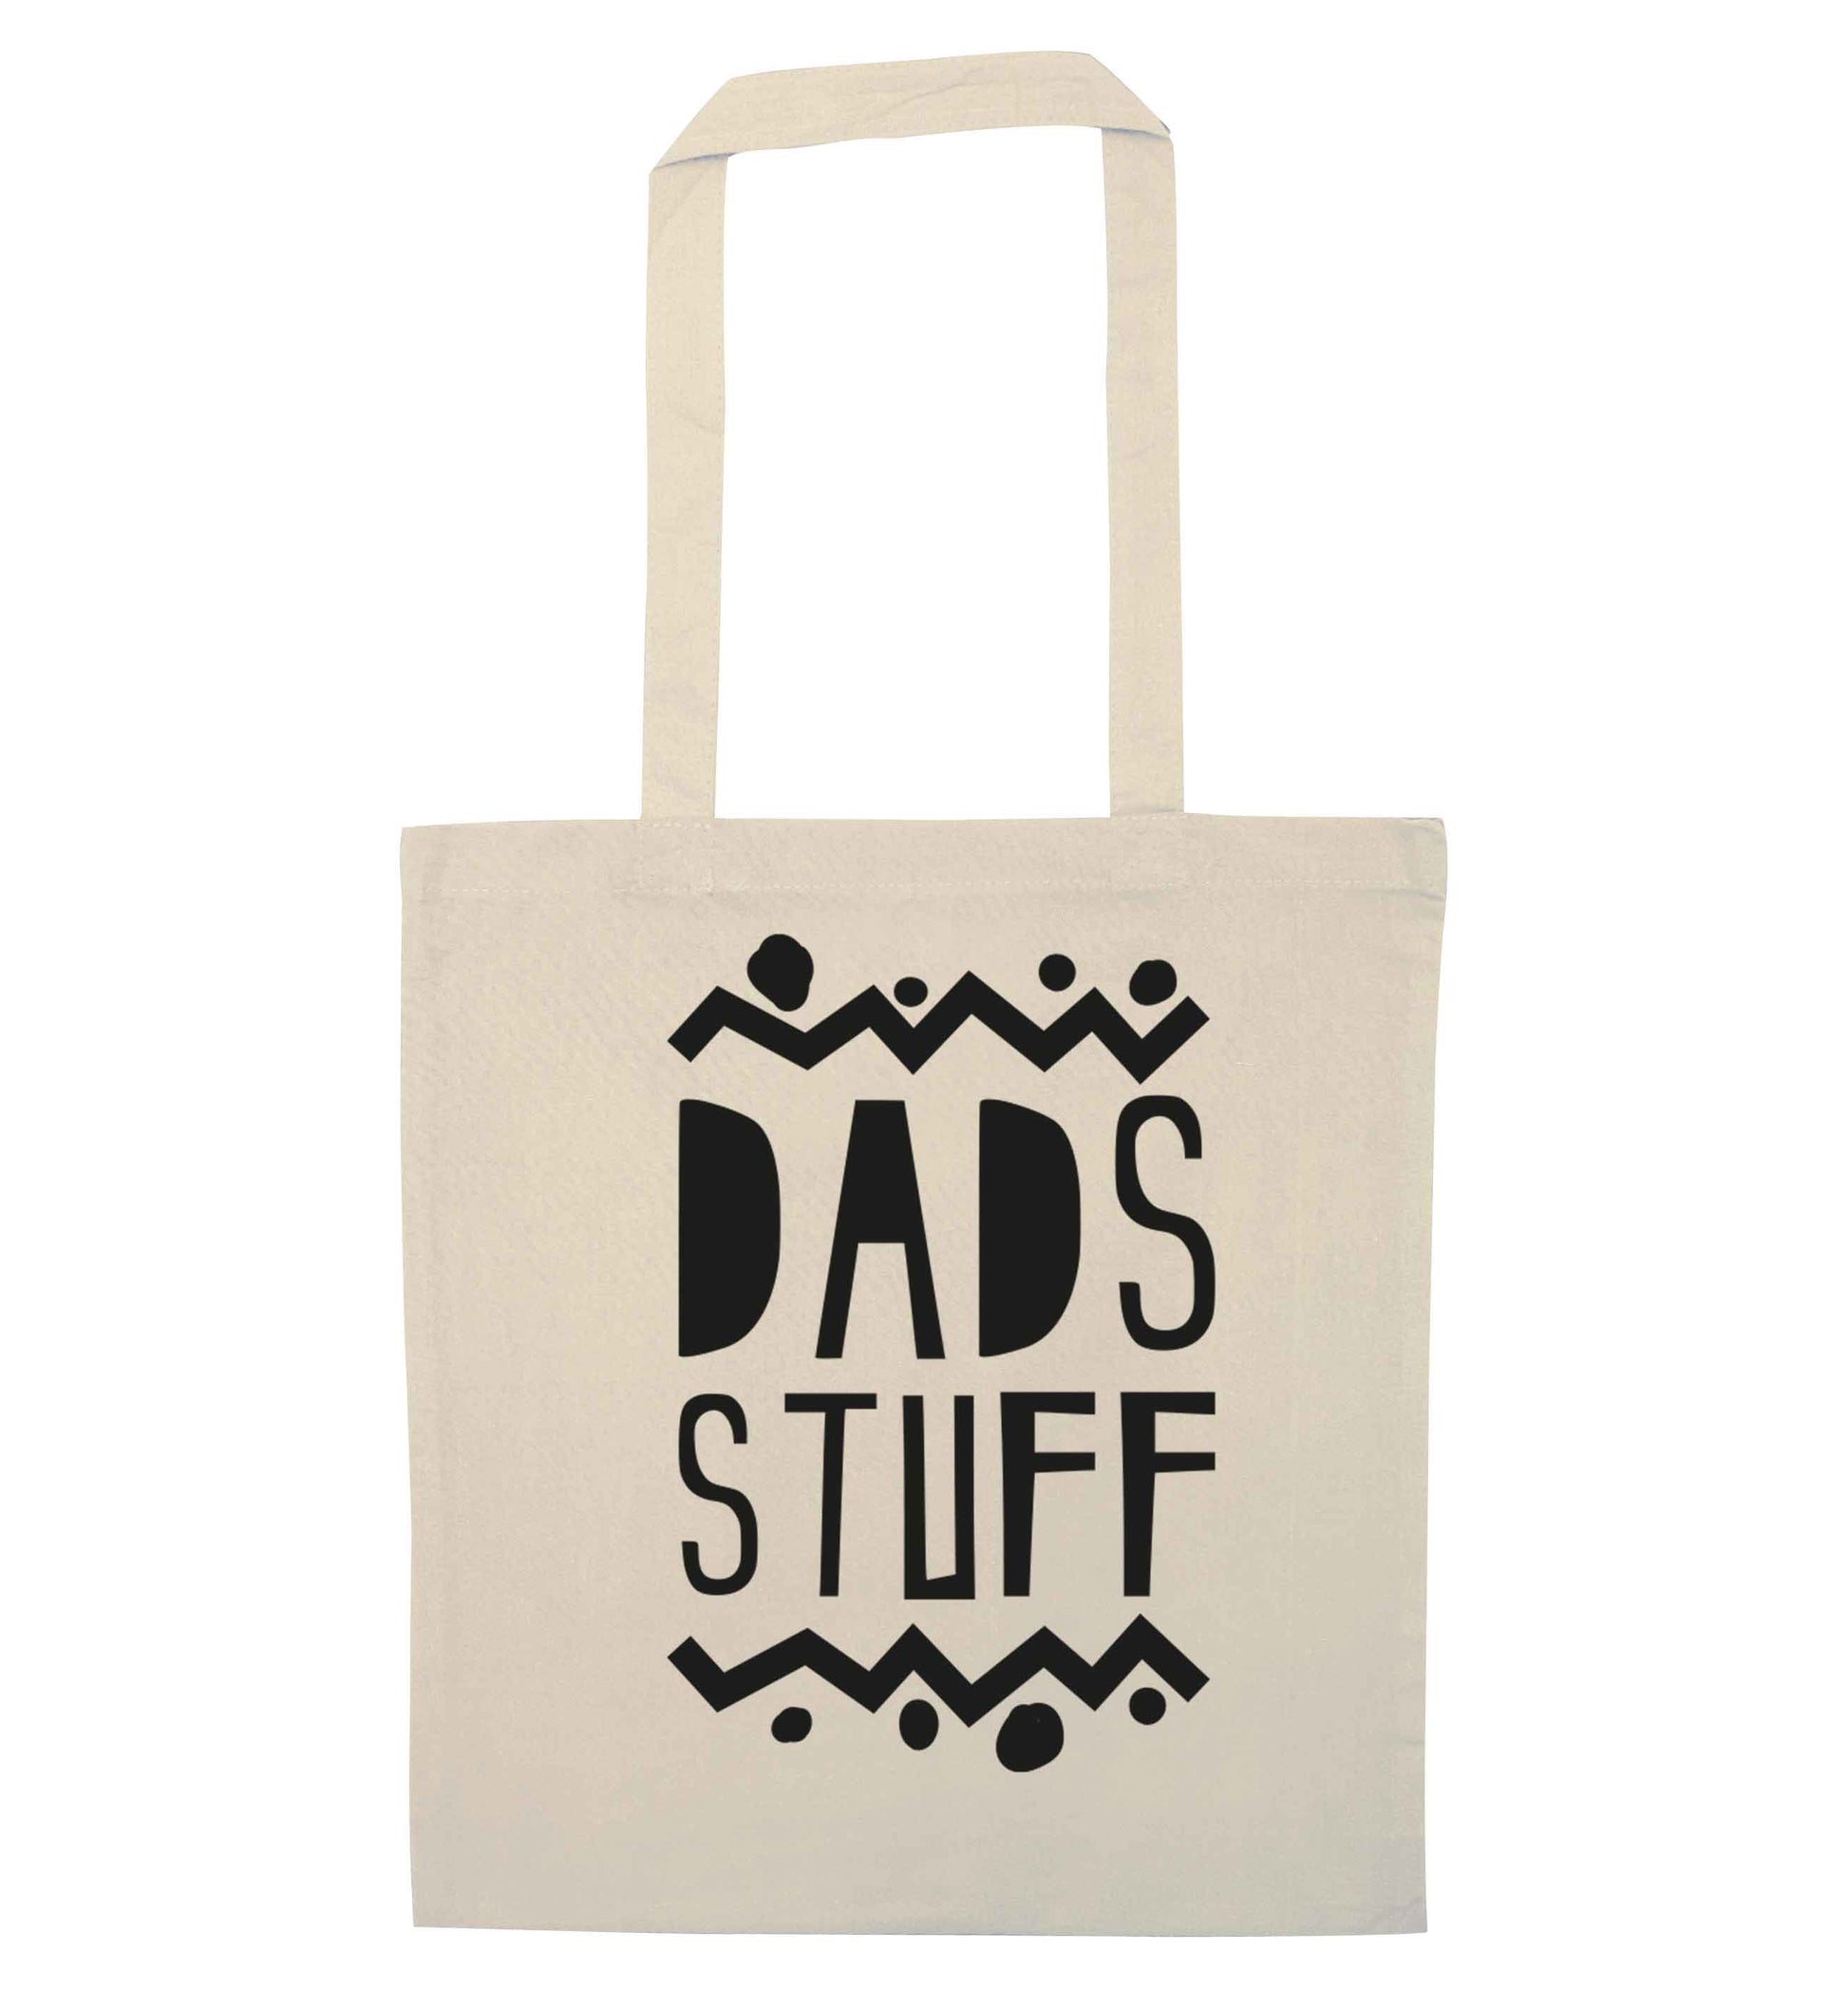 Dads stuff natural tote bag